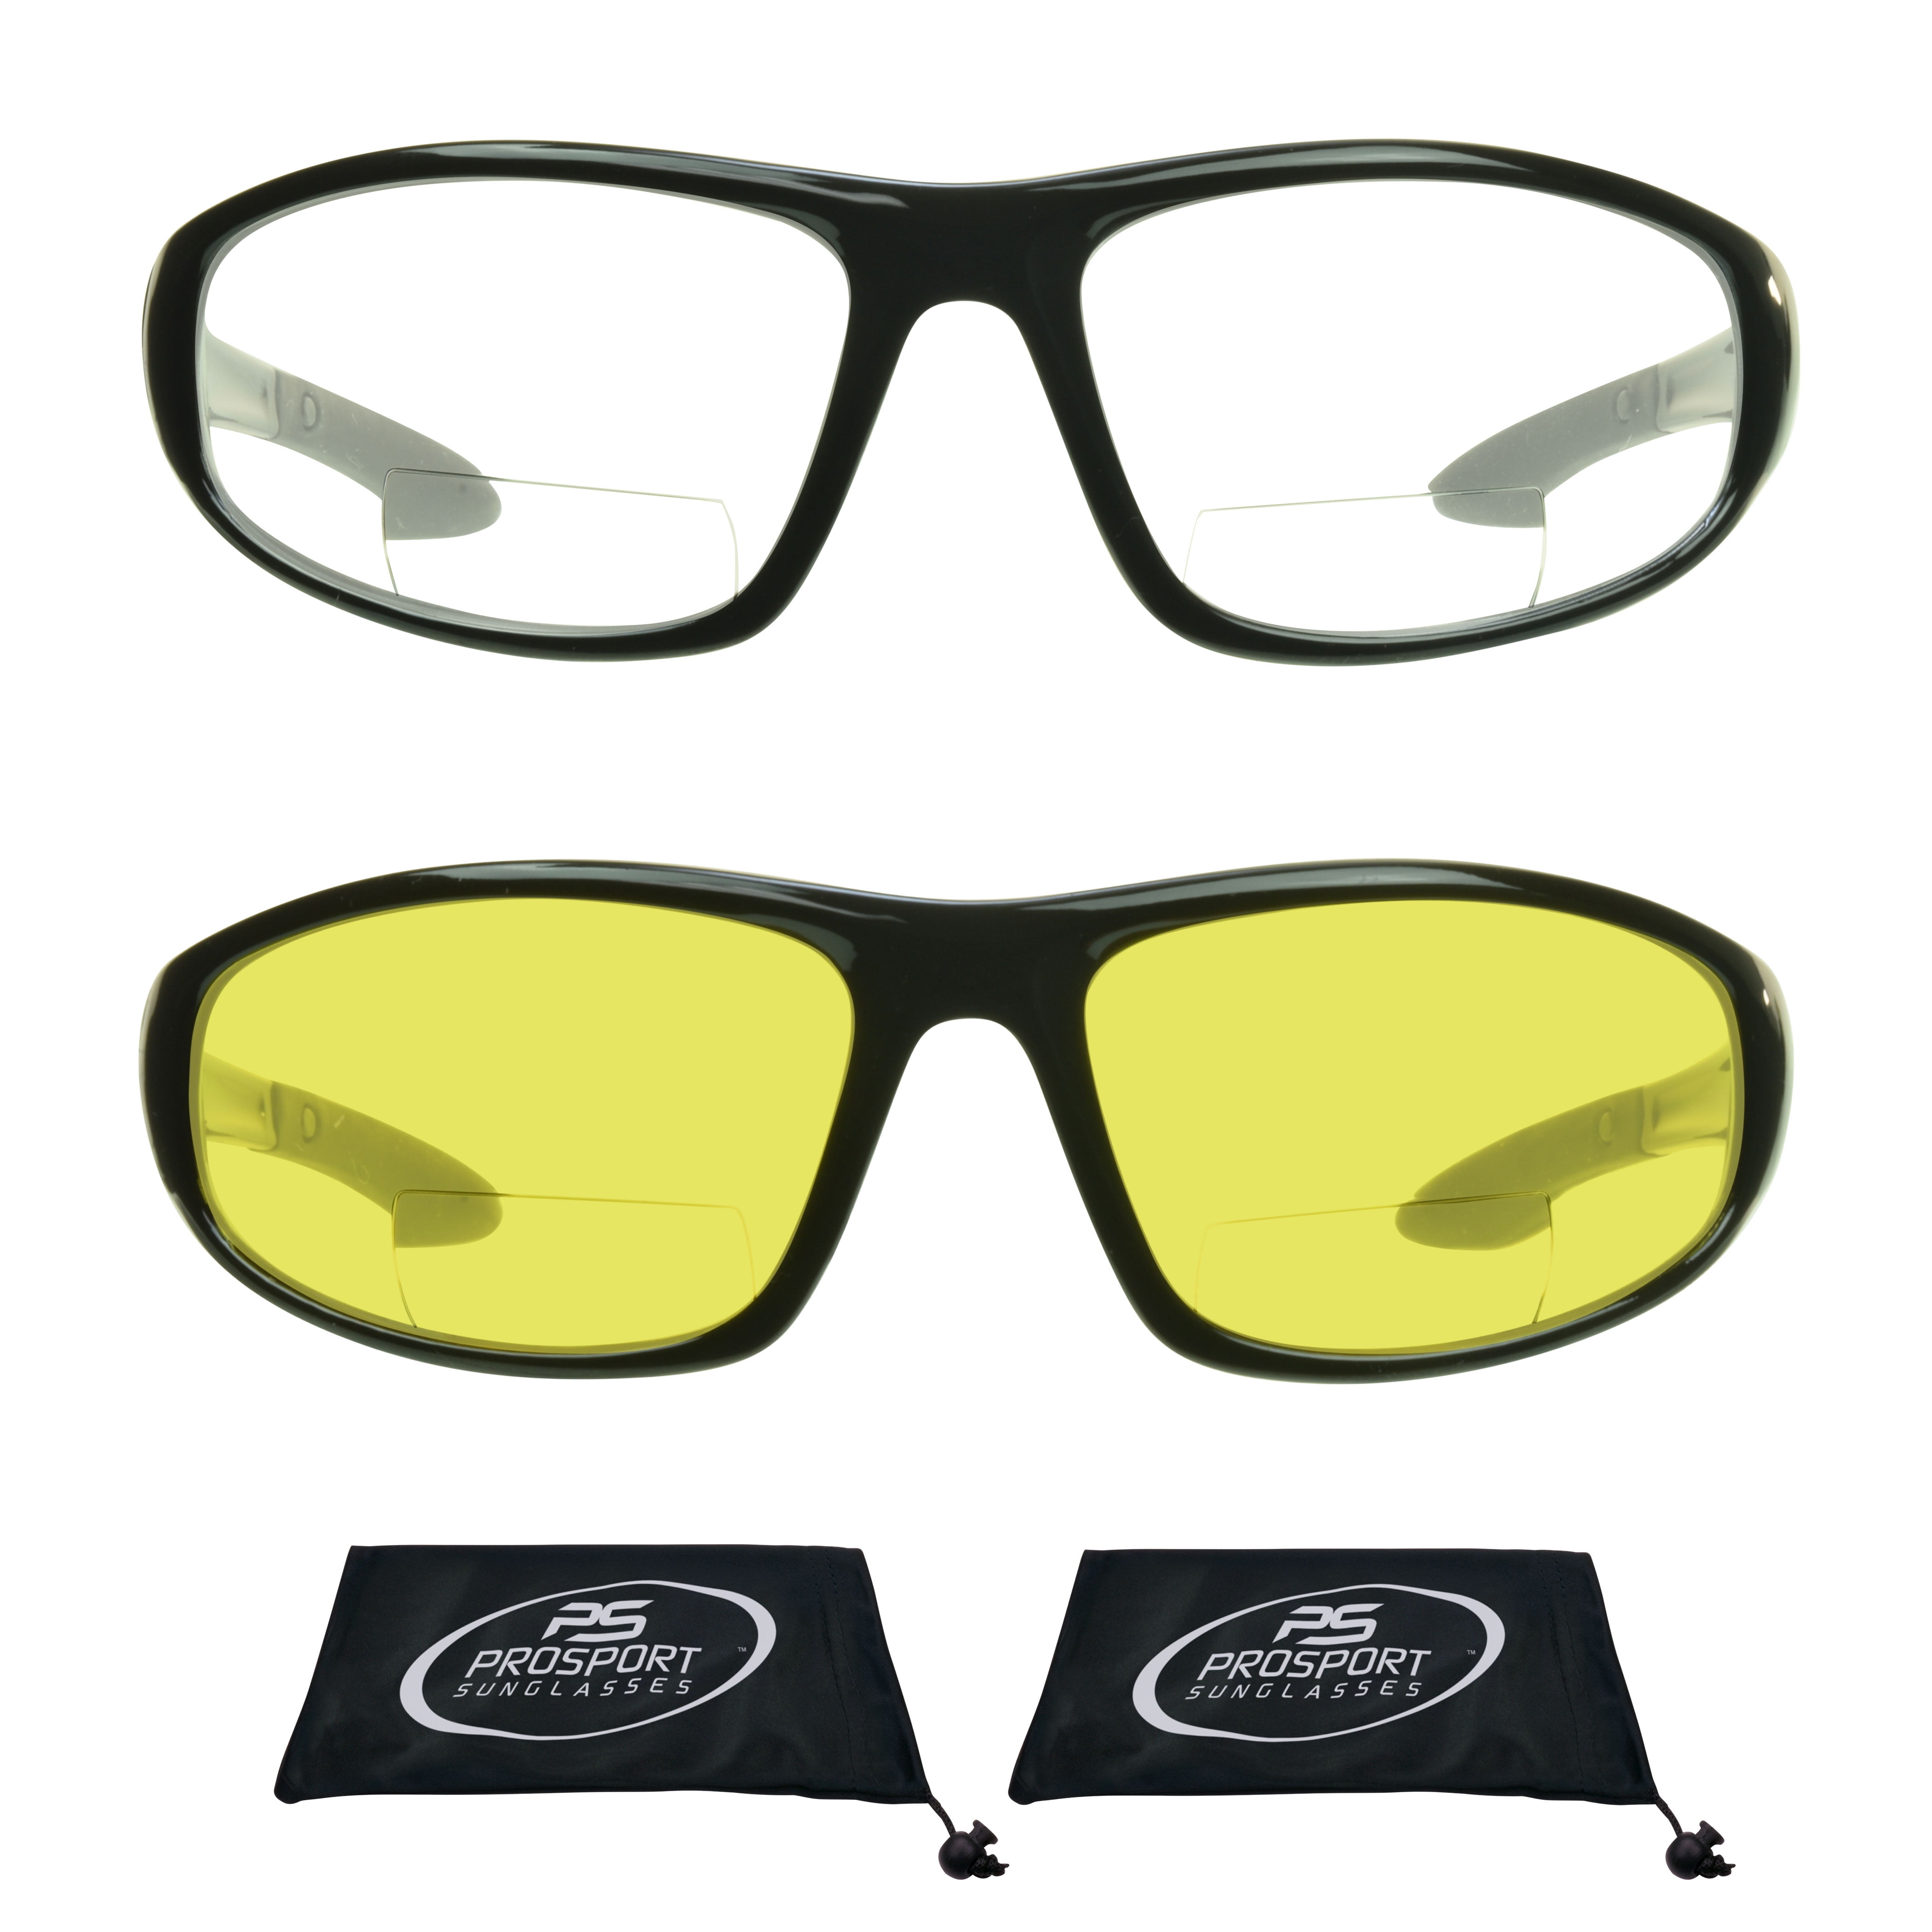 2.5 Magnification Clear Lenses Birdz Eyewear Flamingo Women's Work Safety Glasses Bifocals Readers Purple Frame 